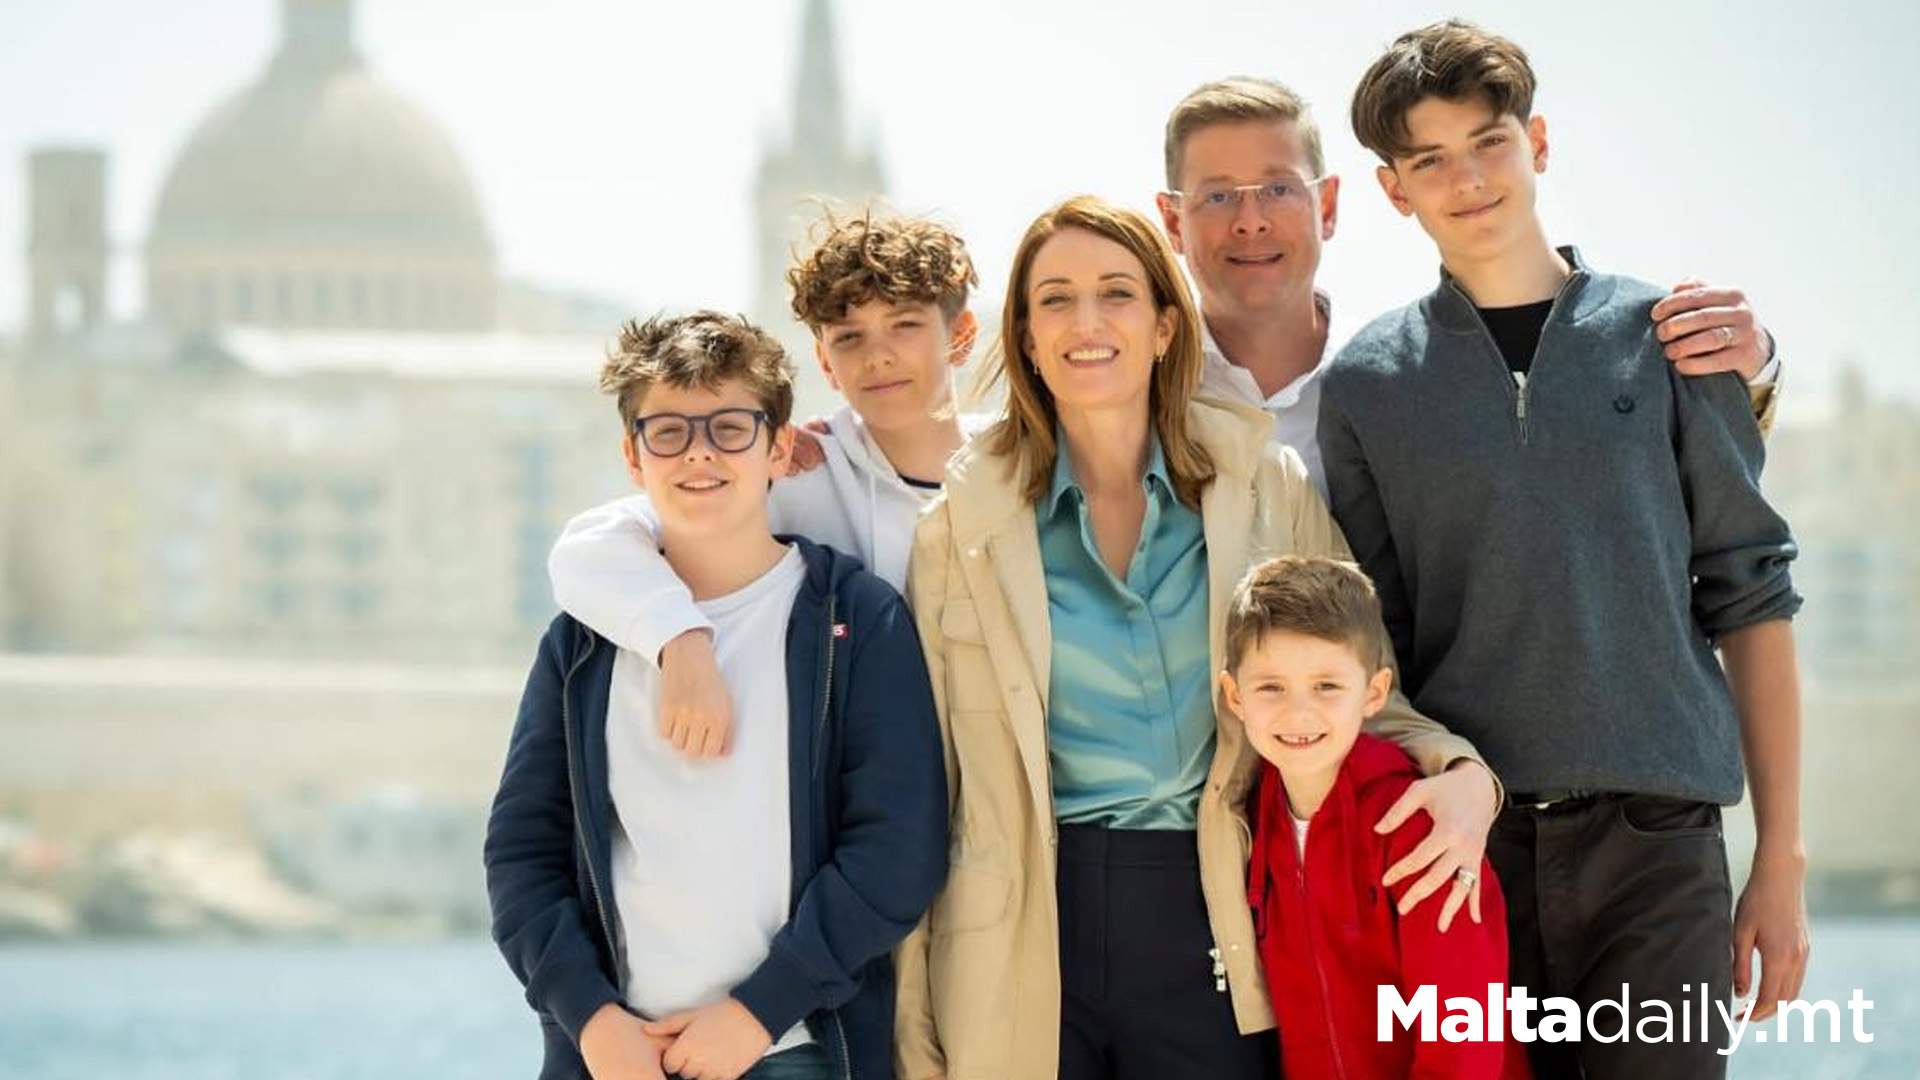 Metsola Chooses Malta Harbour As Official Family Photo Backdrop